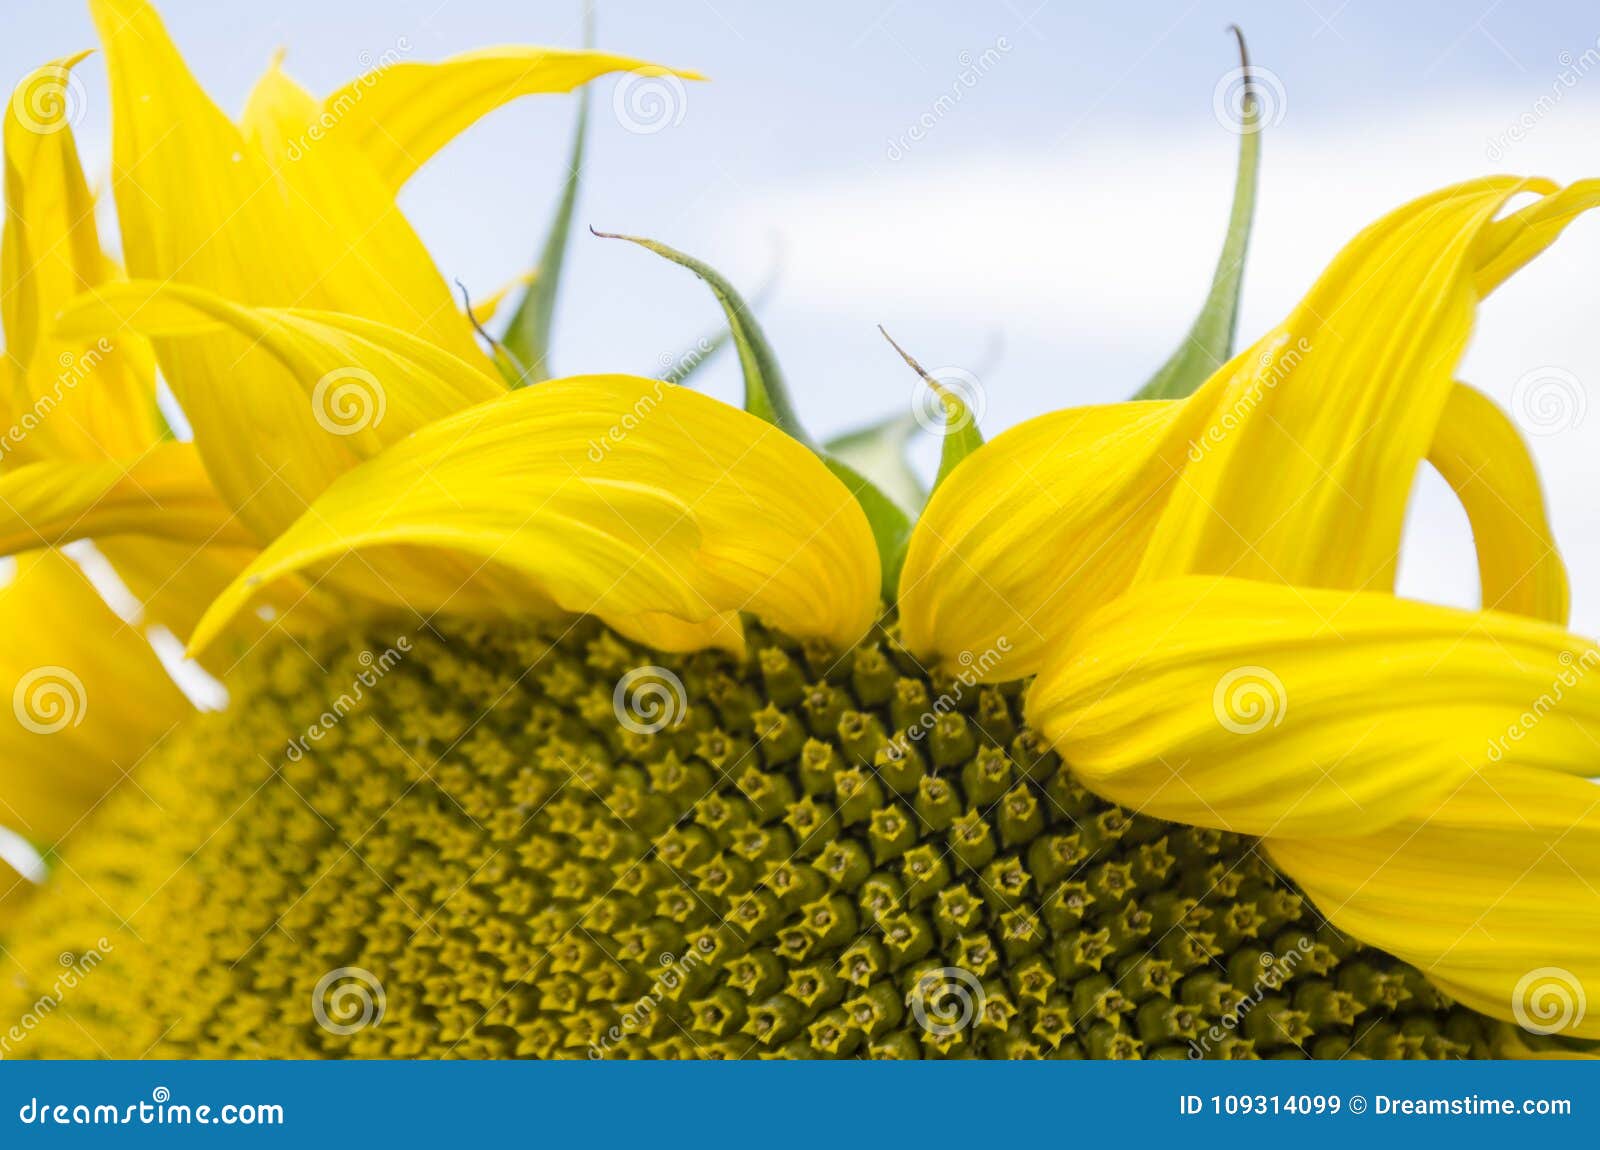 blooming sunflower petals